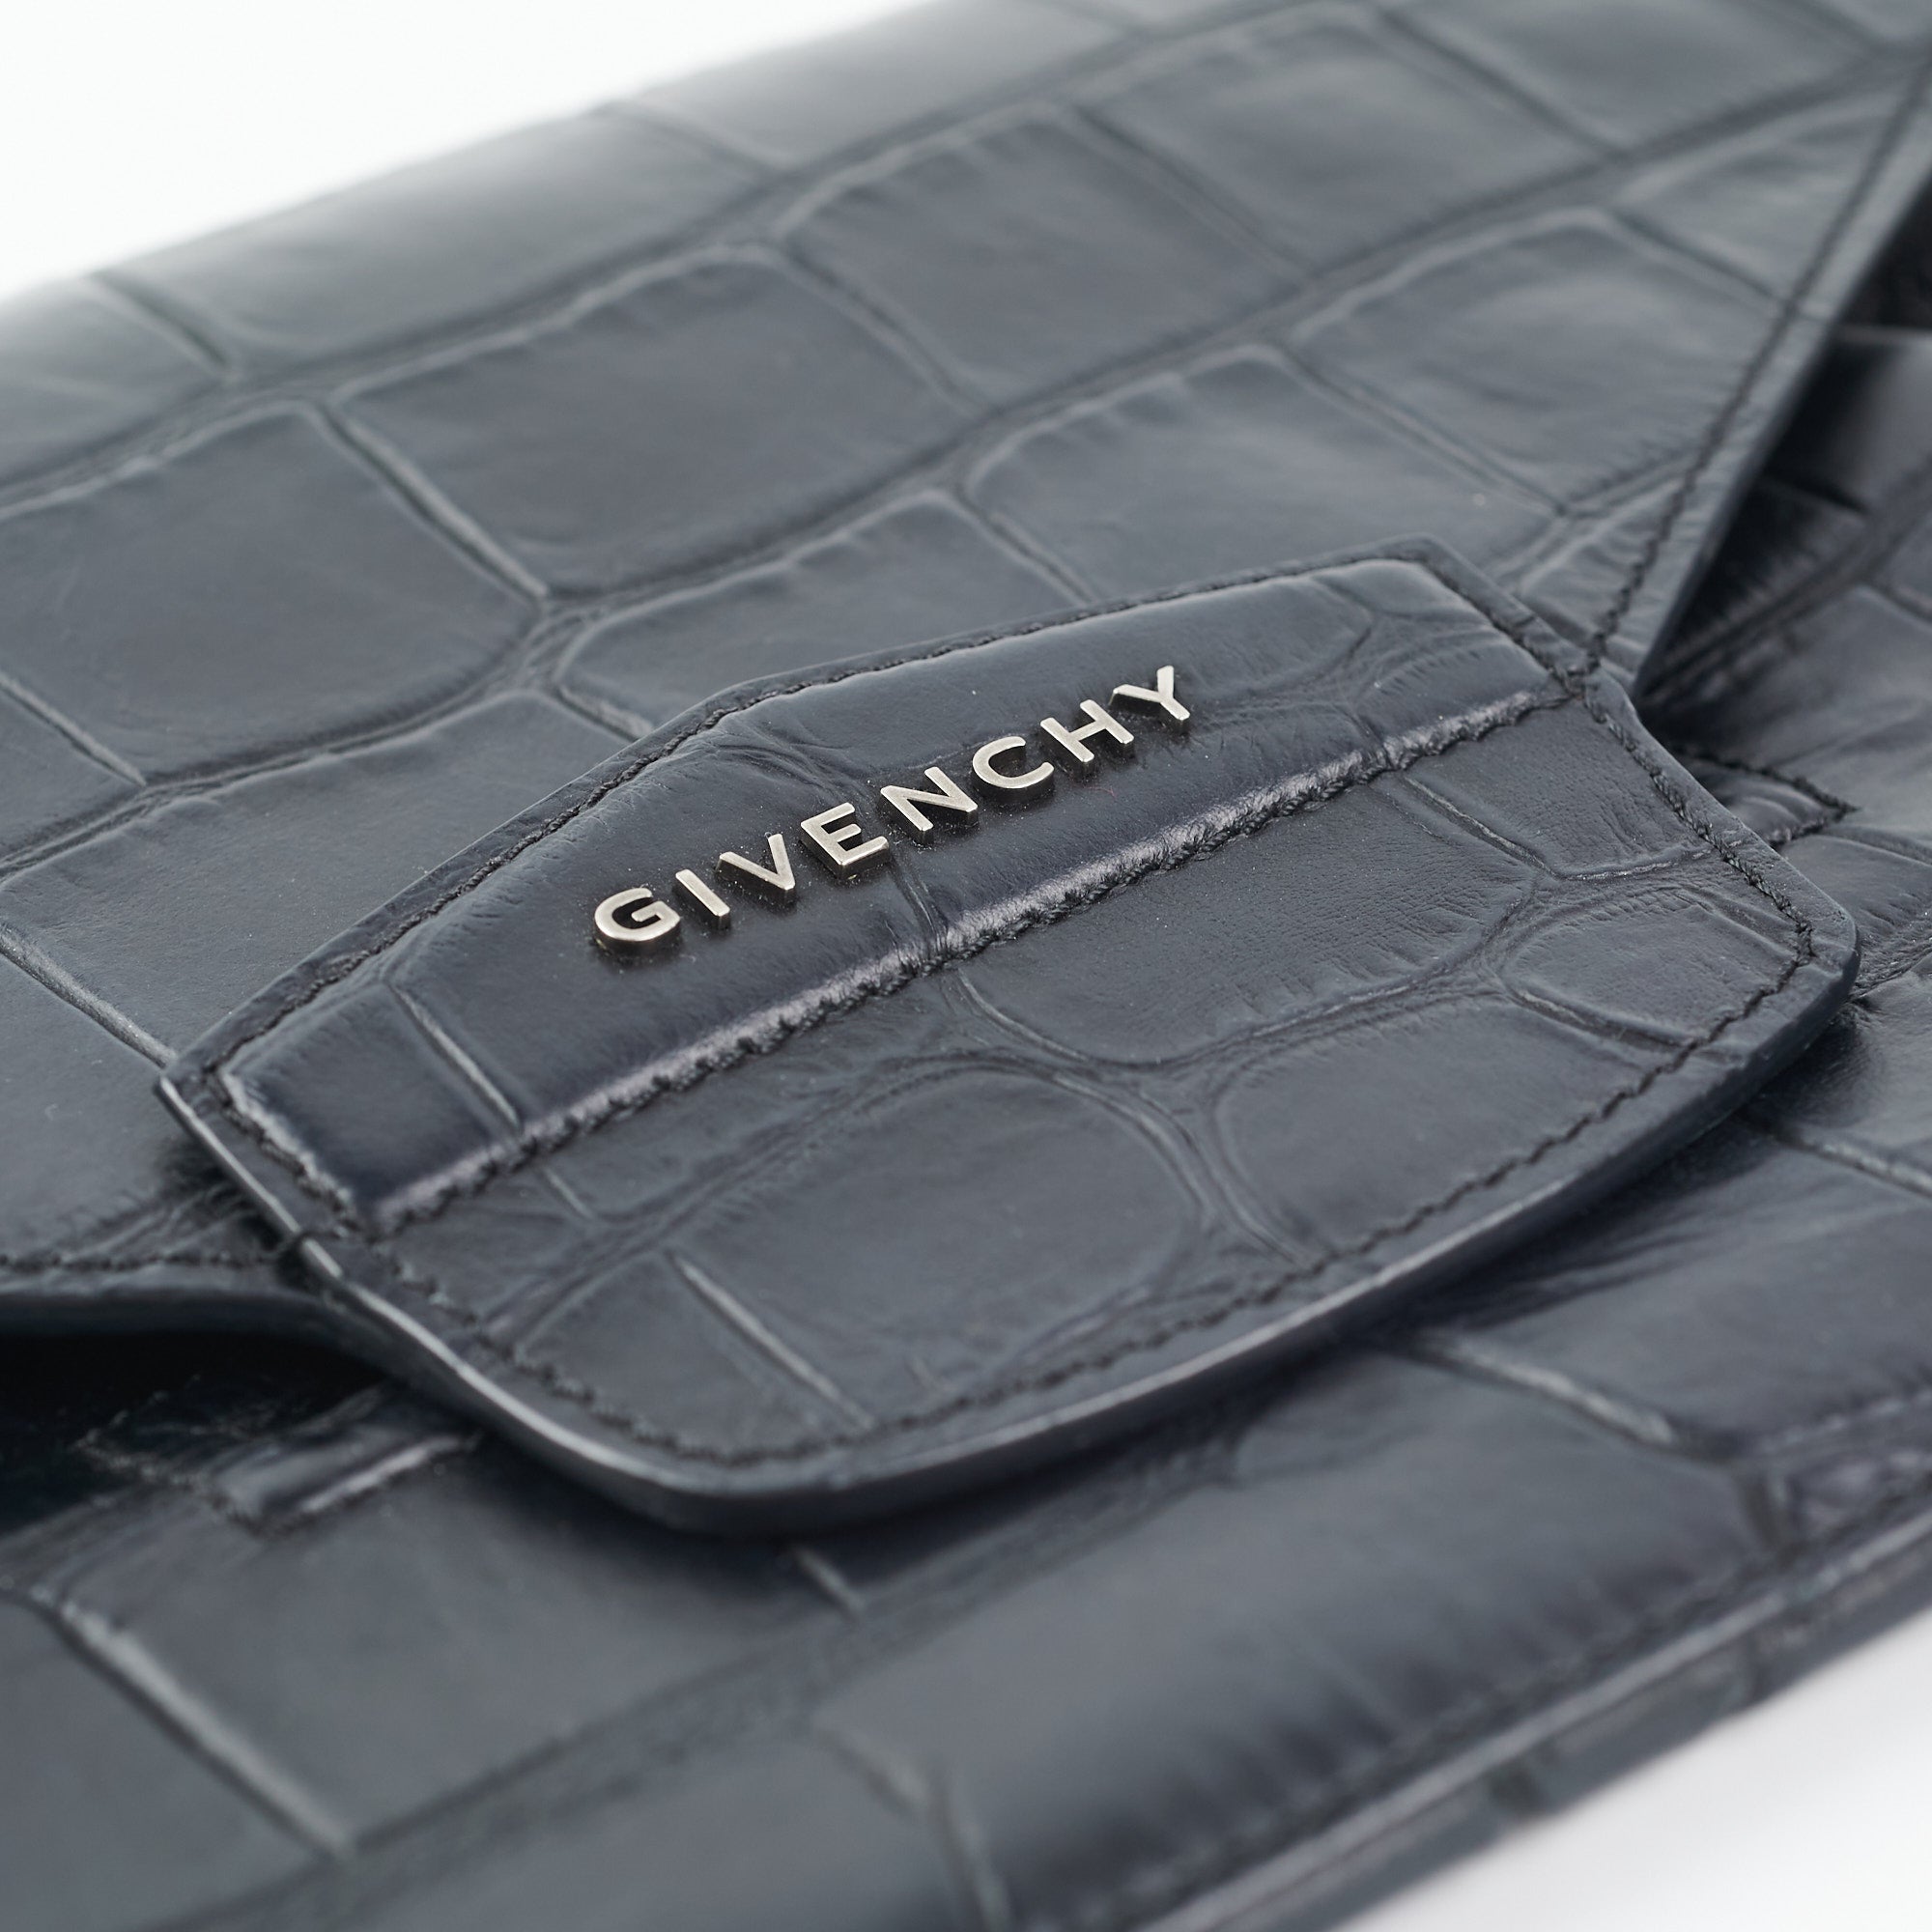 Clutches Givenchy - Medim Antigona pouch - BC06821012610